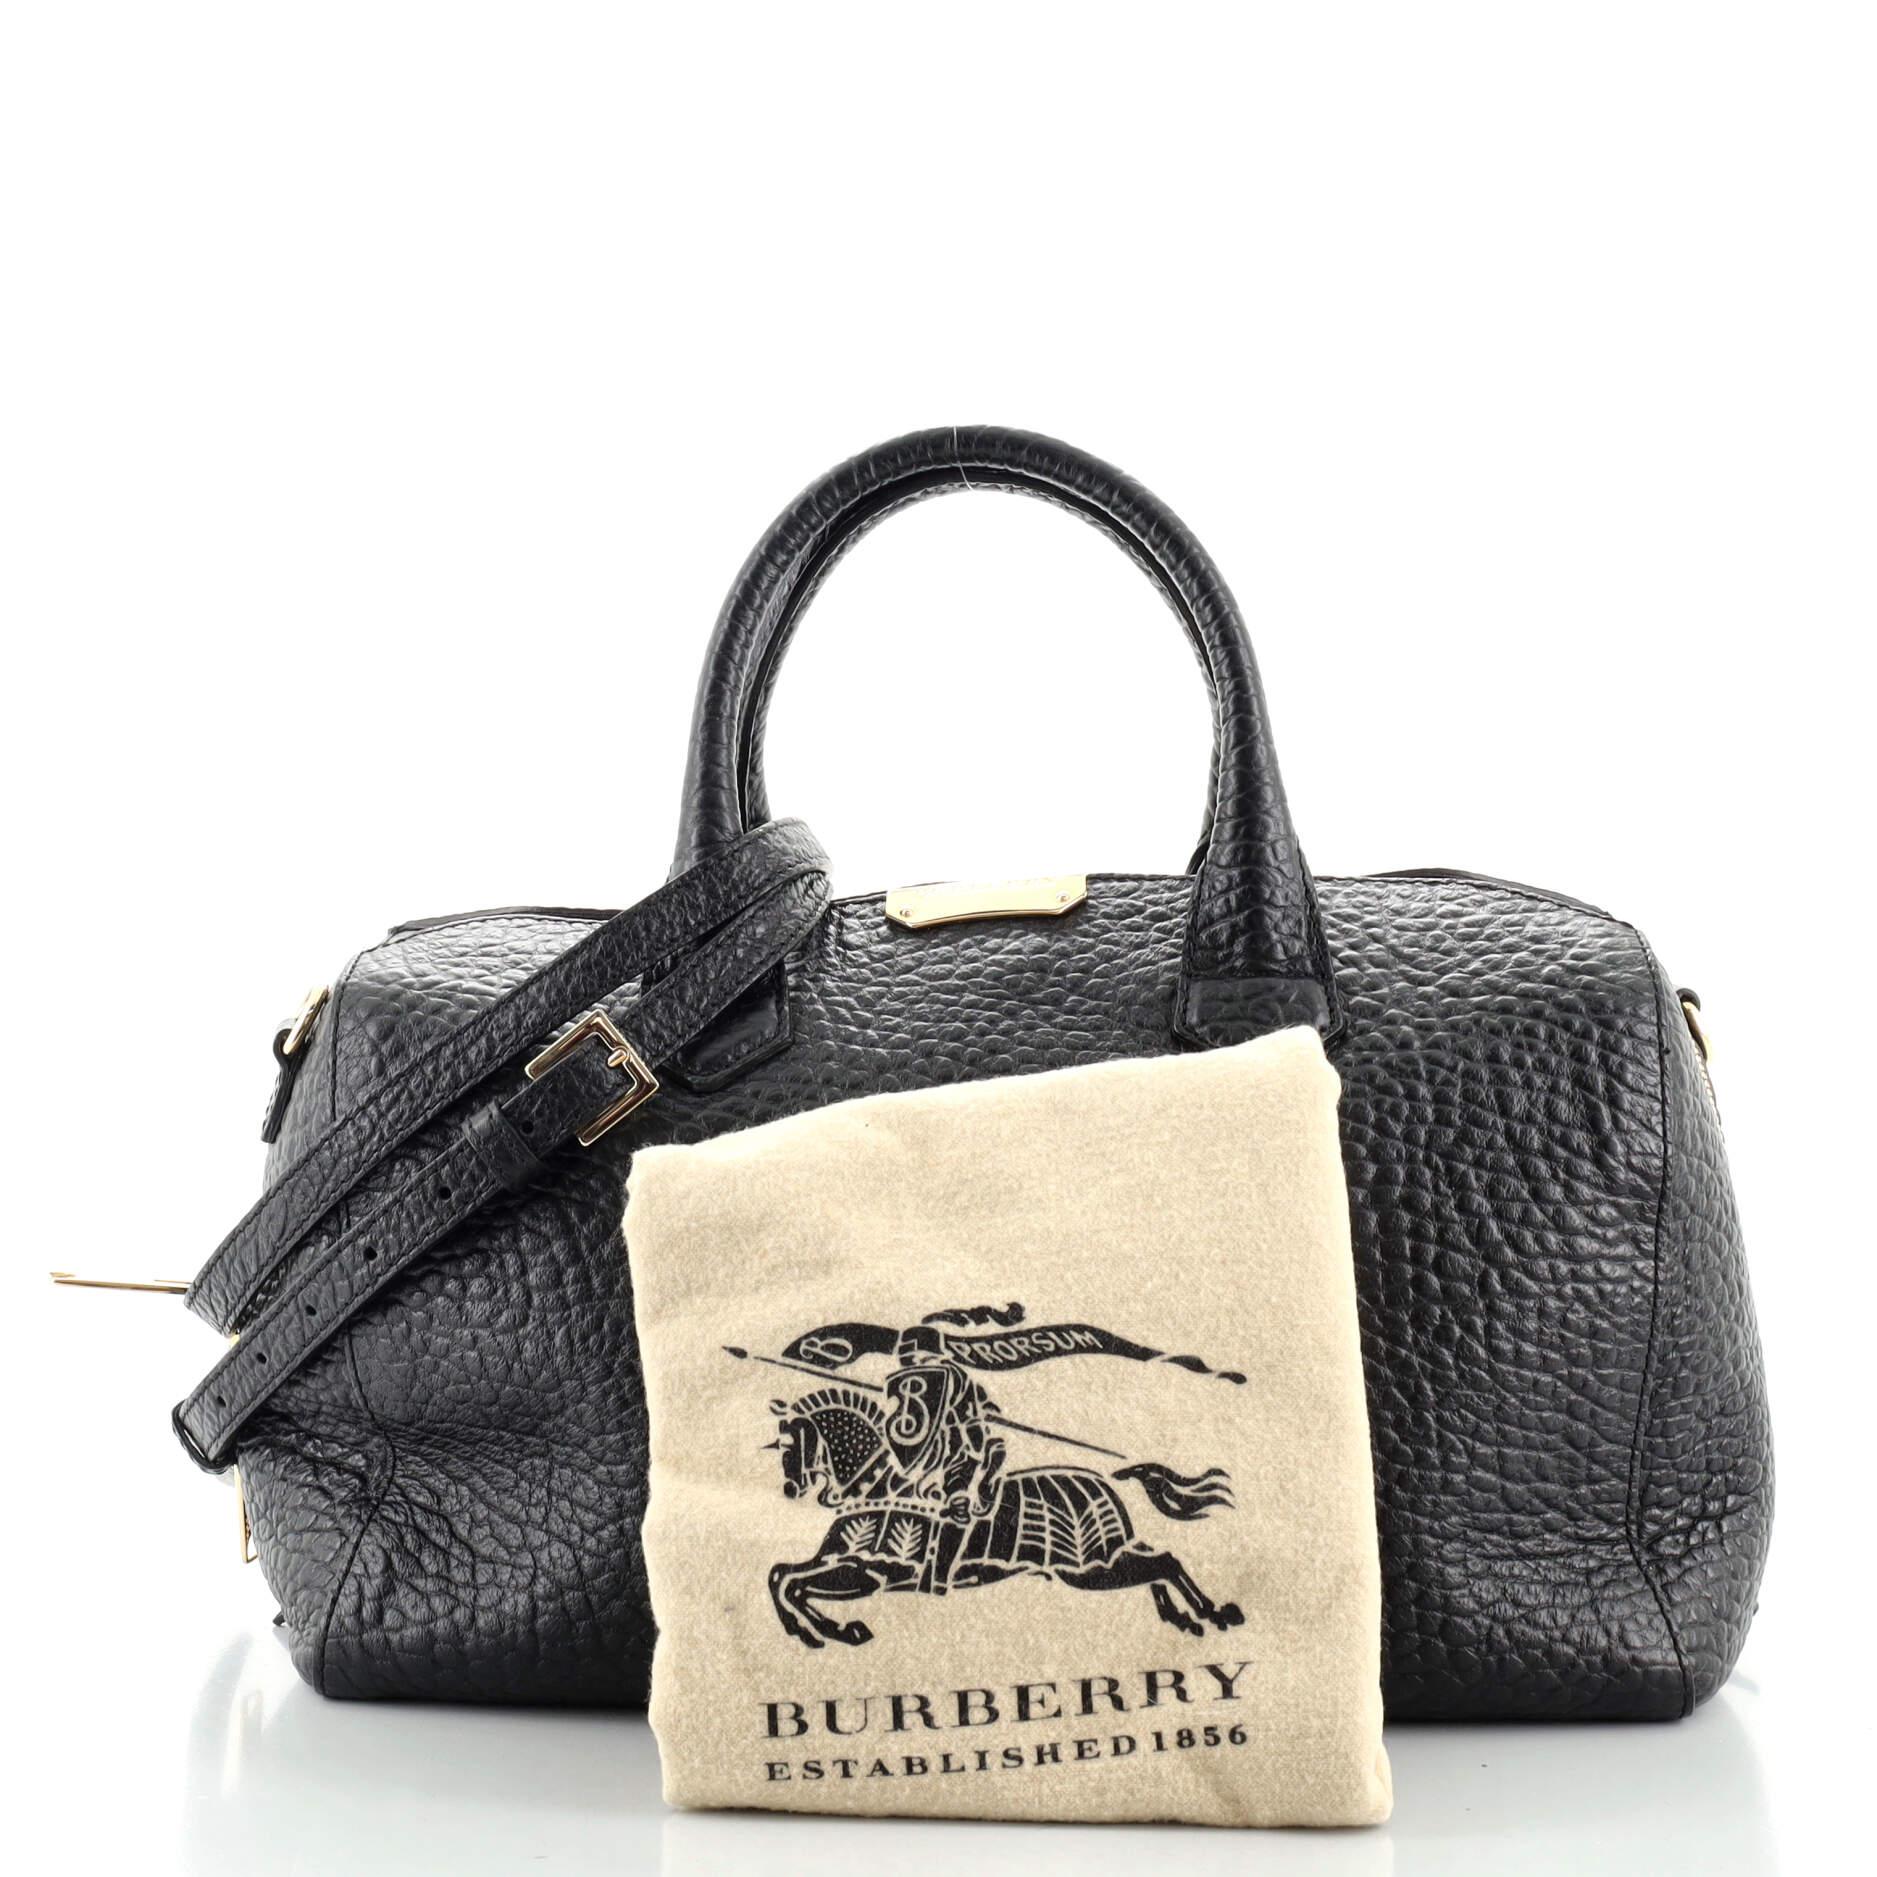 Burberry Bowling Bag - 4 For Sale on 1stDibs